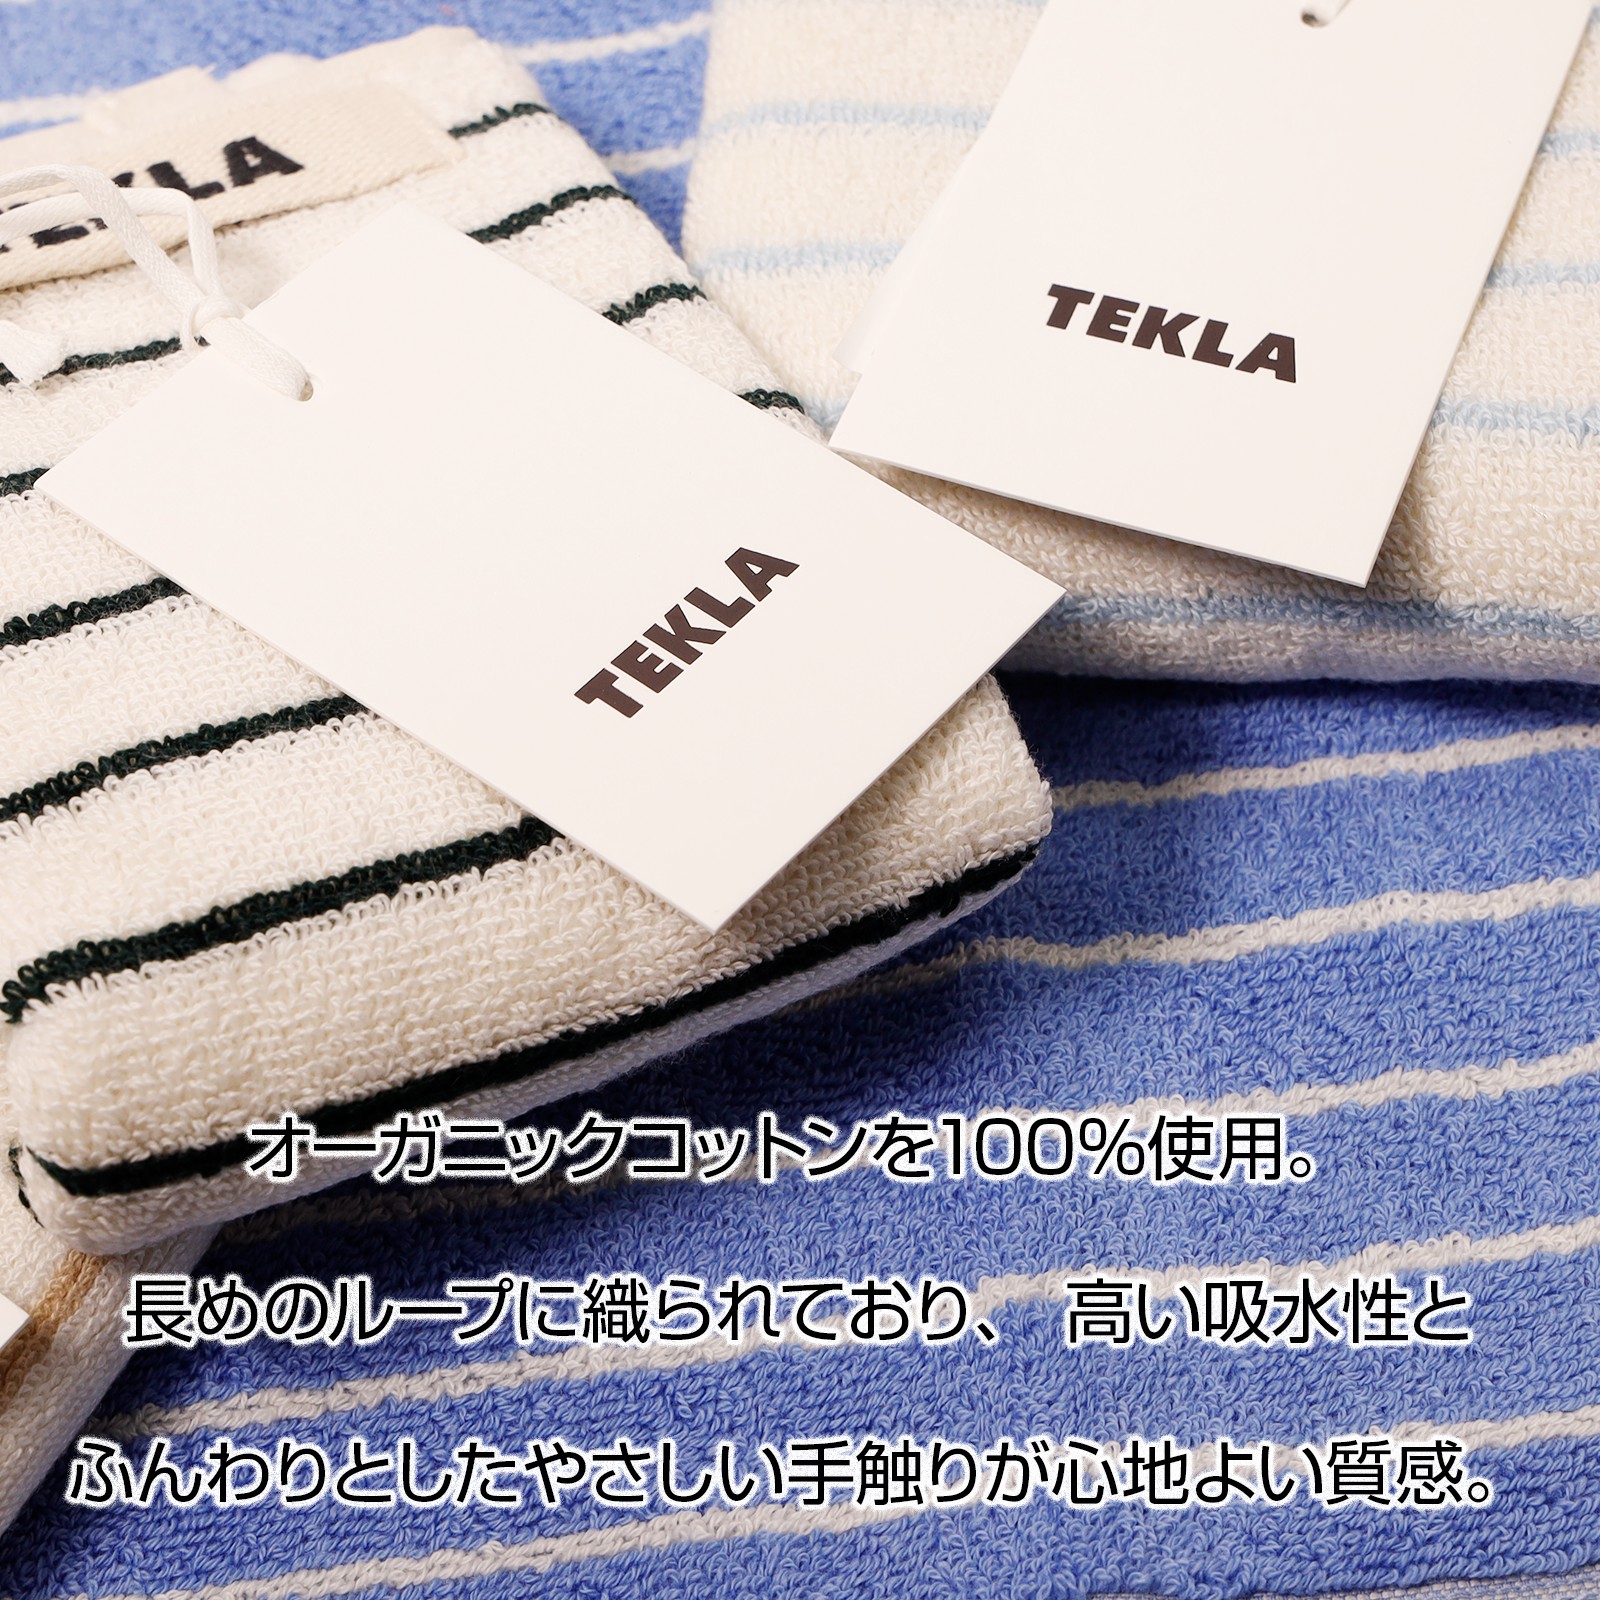  tech laTEKLA носовой платок подарок полотенце для рук полотенце Северная Европа tech la Mini полотенце . узор полоса название inserting 